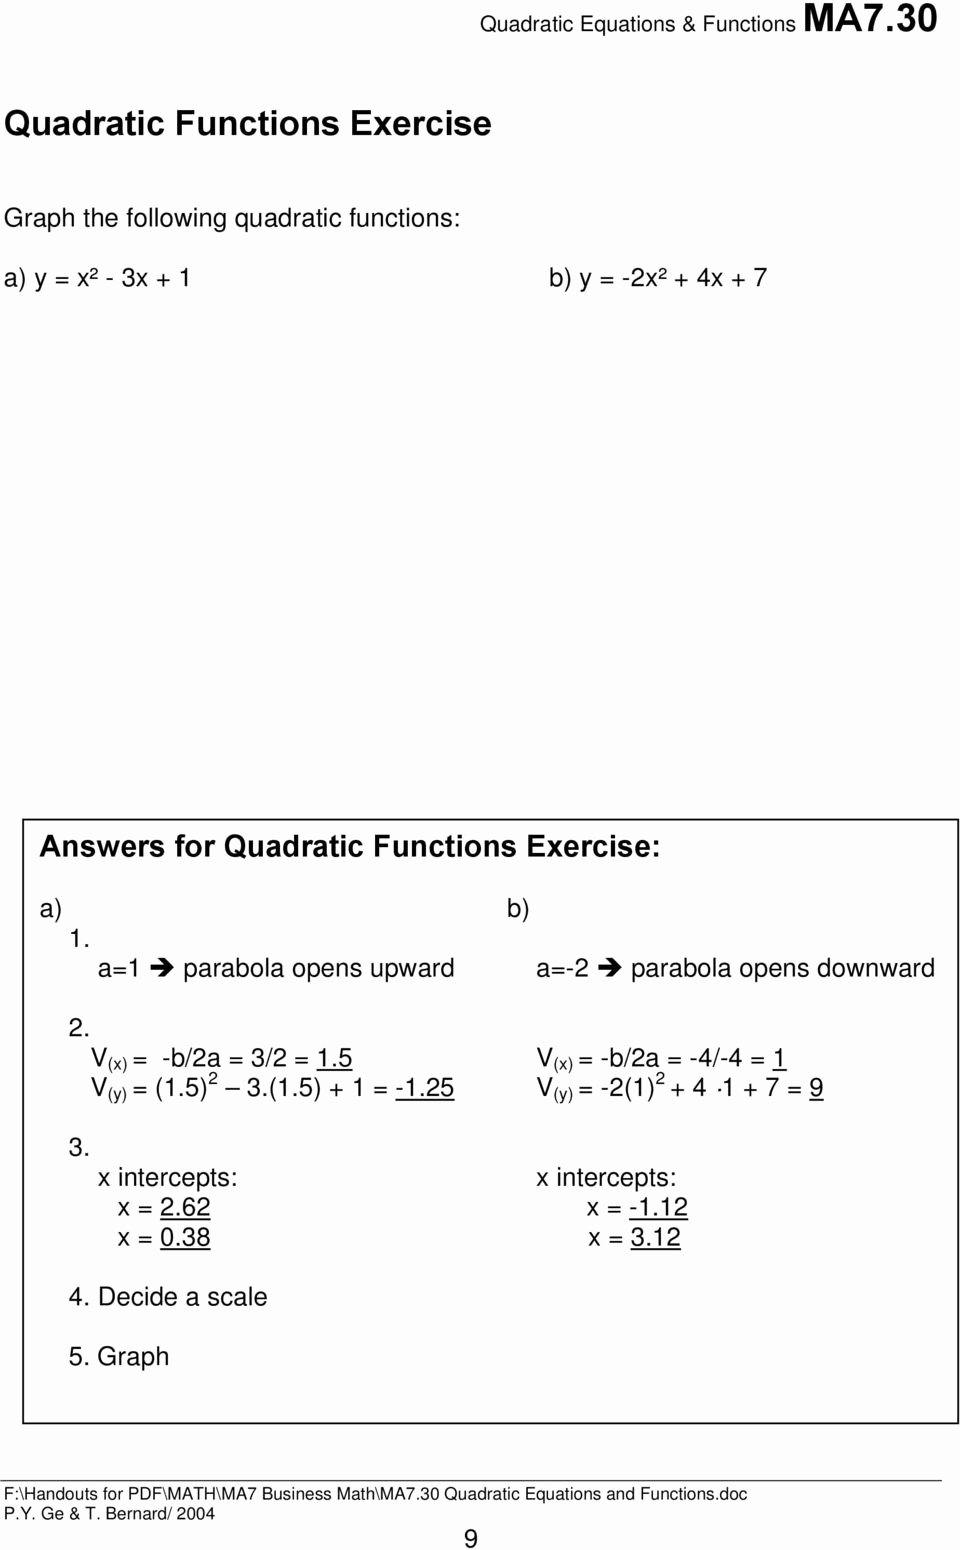 Quadratic Word Problems Worksheet New Worksheet Quadratic Equations Word Problems Worksheet